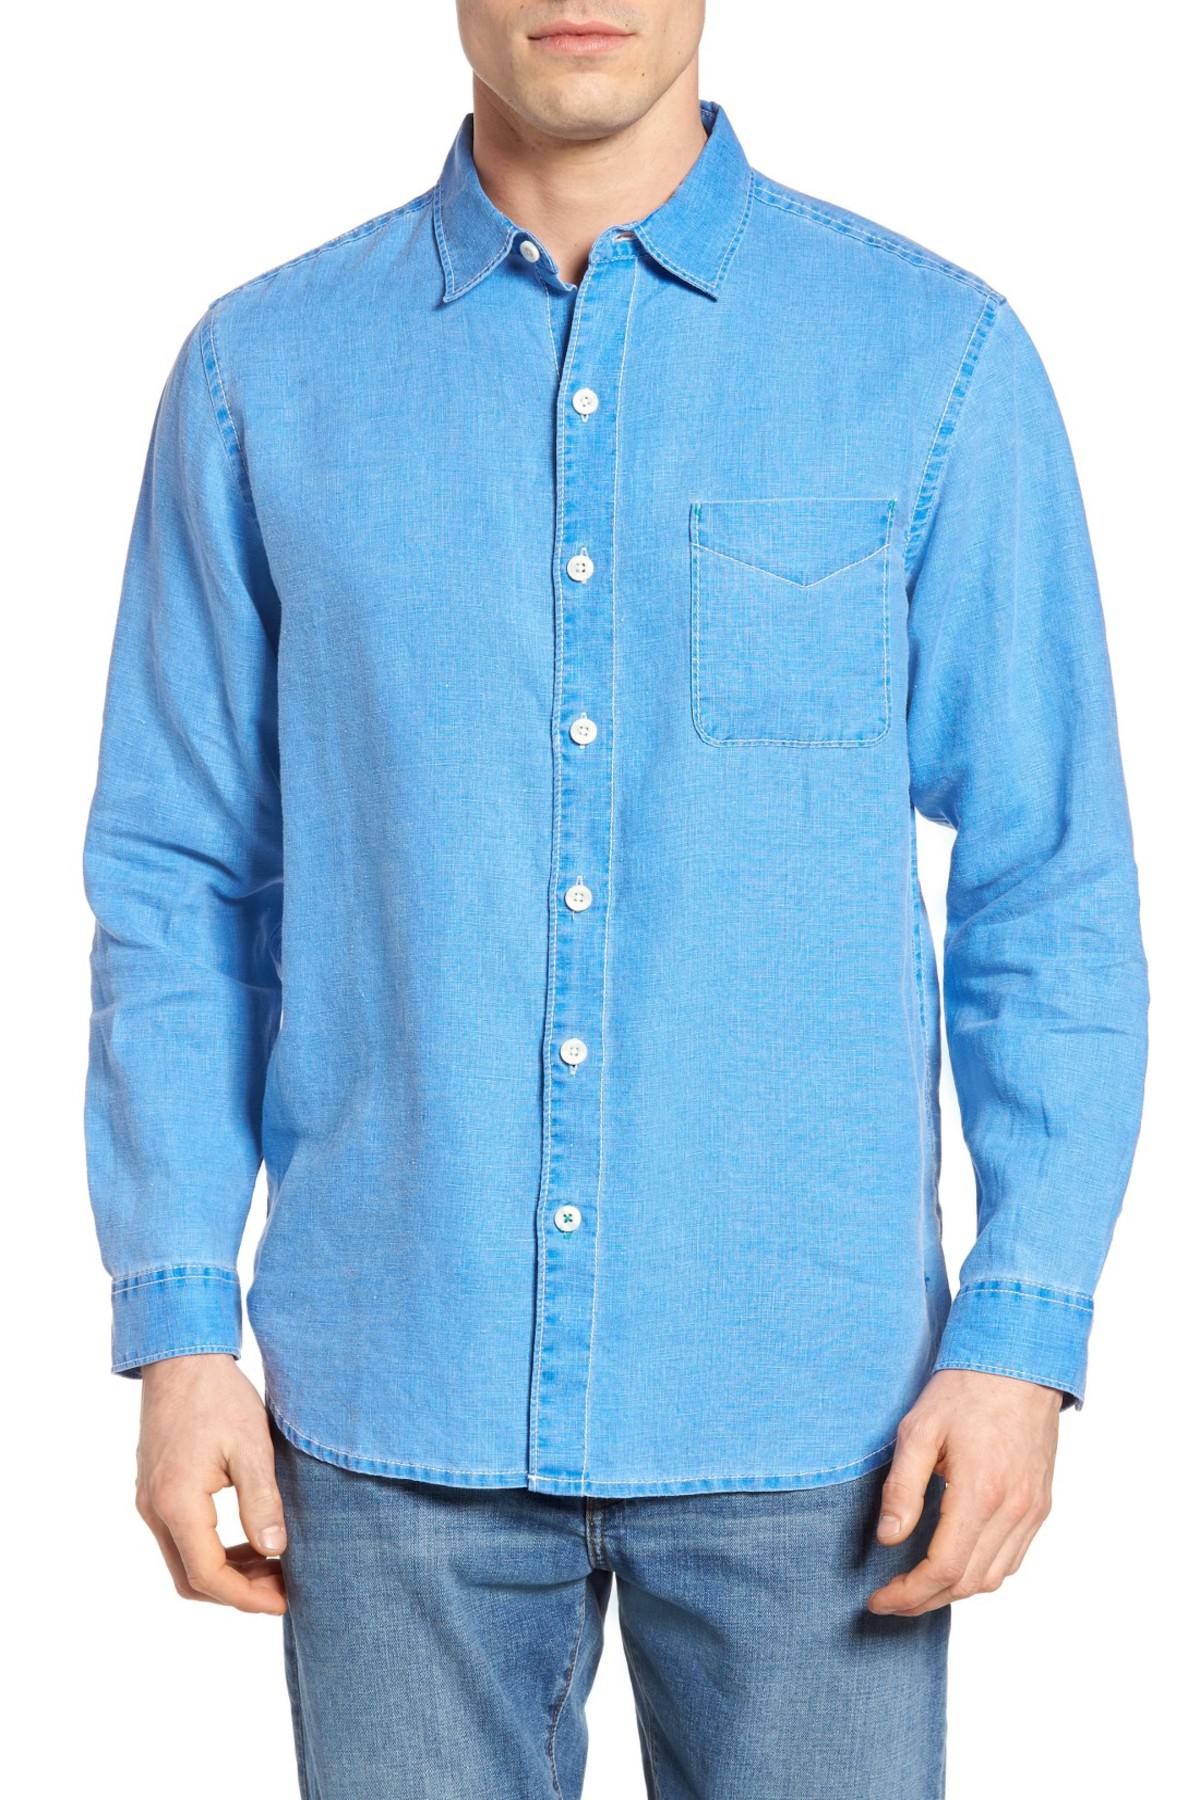 Lyst - Tommy Bahama Sea Glass Breezer Original Fit Linen Shirt in Blue ...